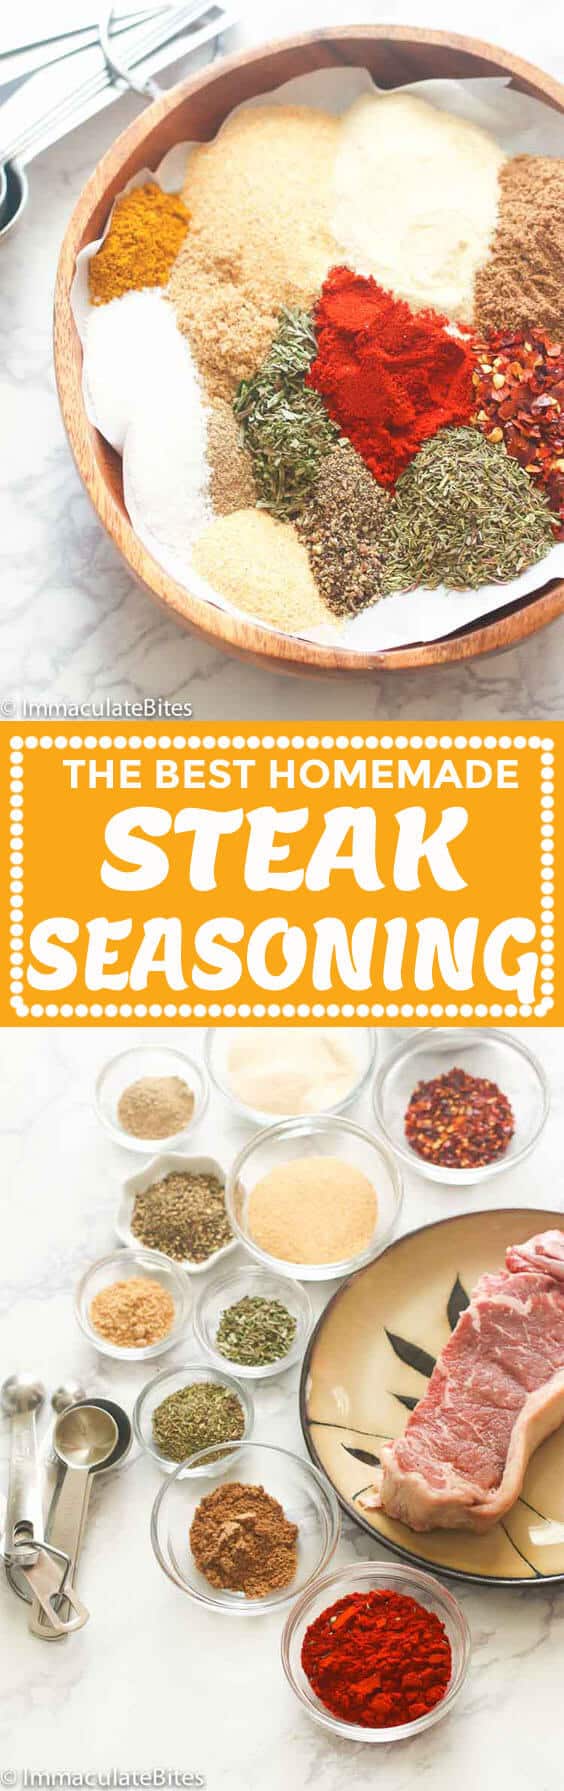 Delicious Homemade Steak Seasoning Recipe